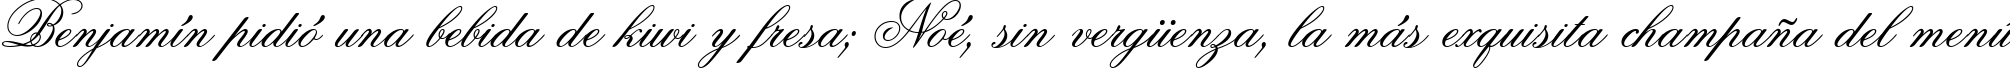 Пример написания шрифтом Old Script текста на испанском